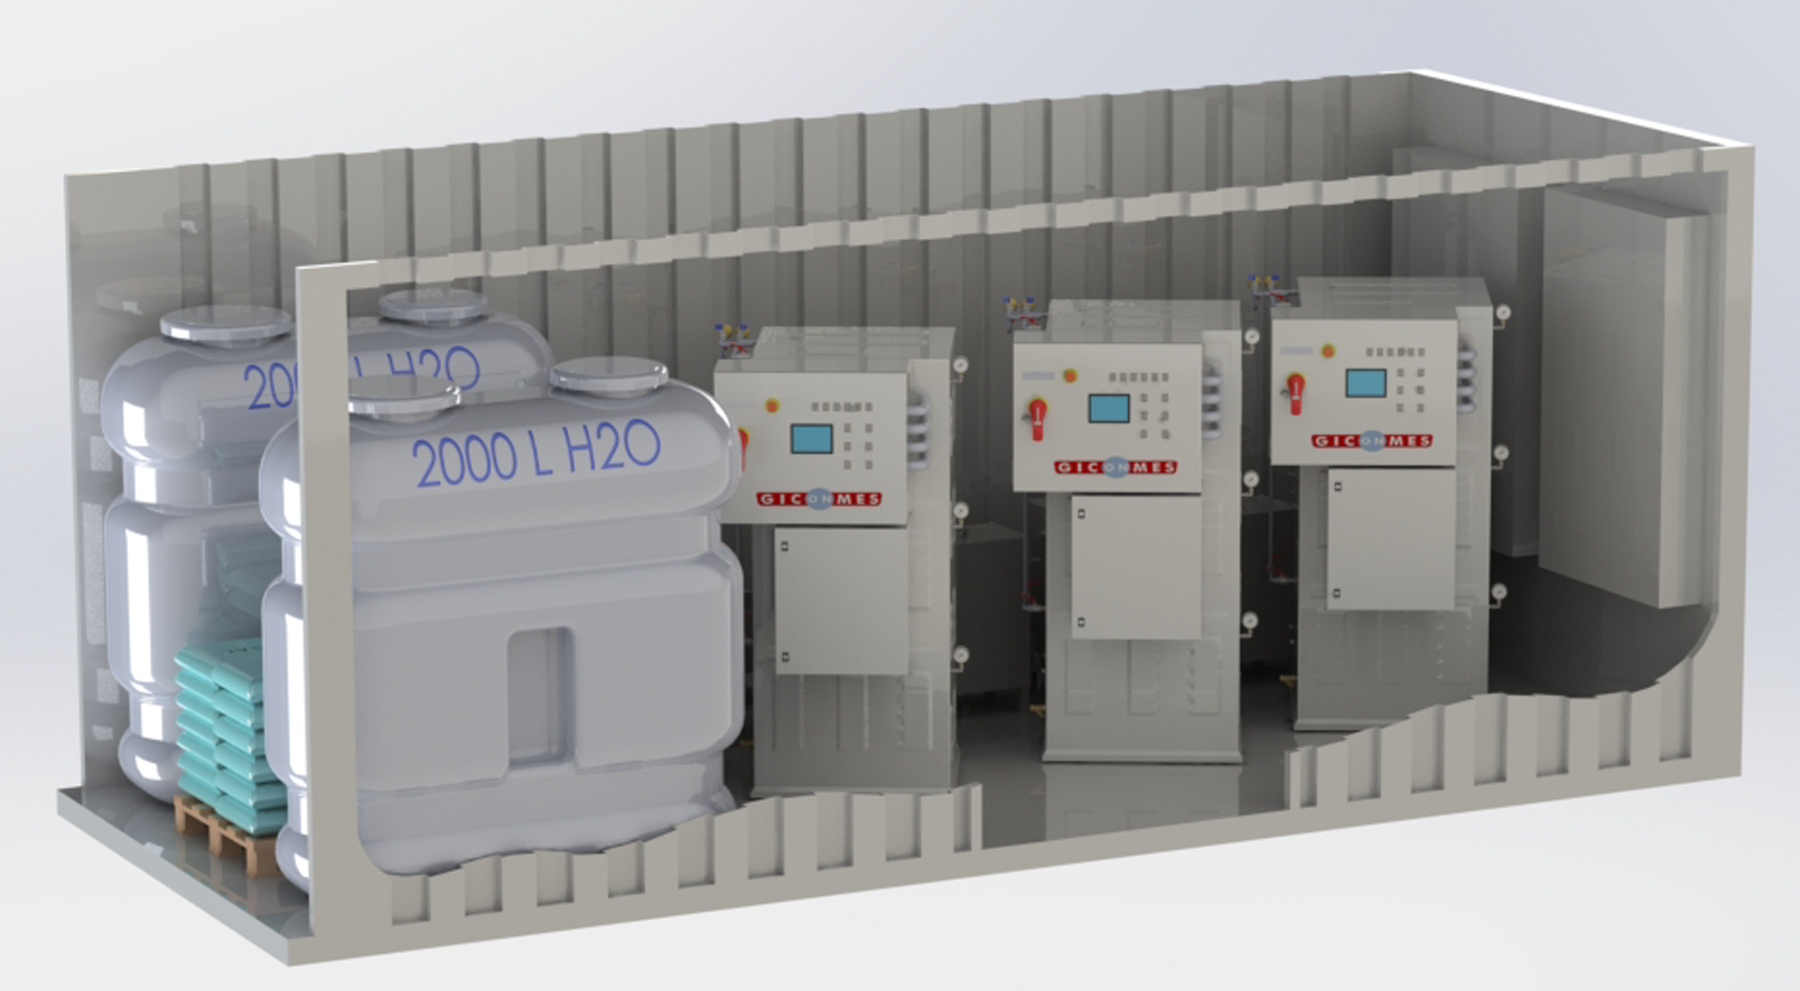 Sala de calderas móvil PS1 cjto 20 piesX2. Generadores de vapor industrial Giconmes